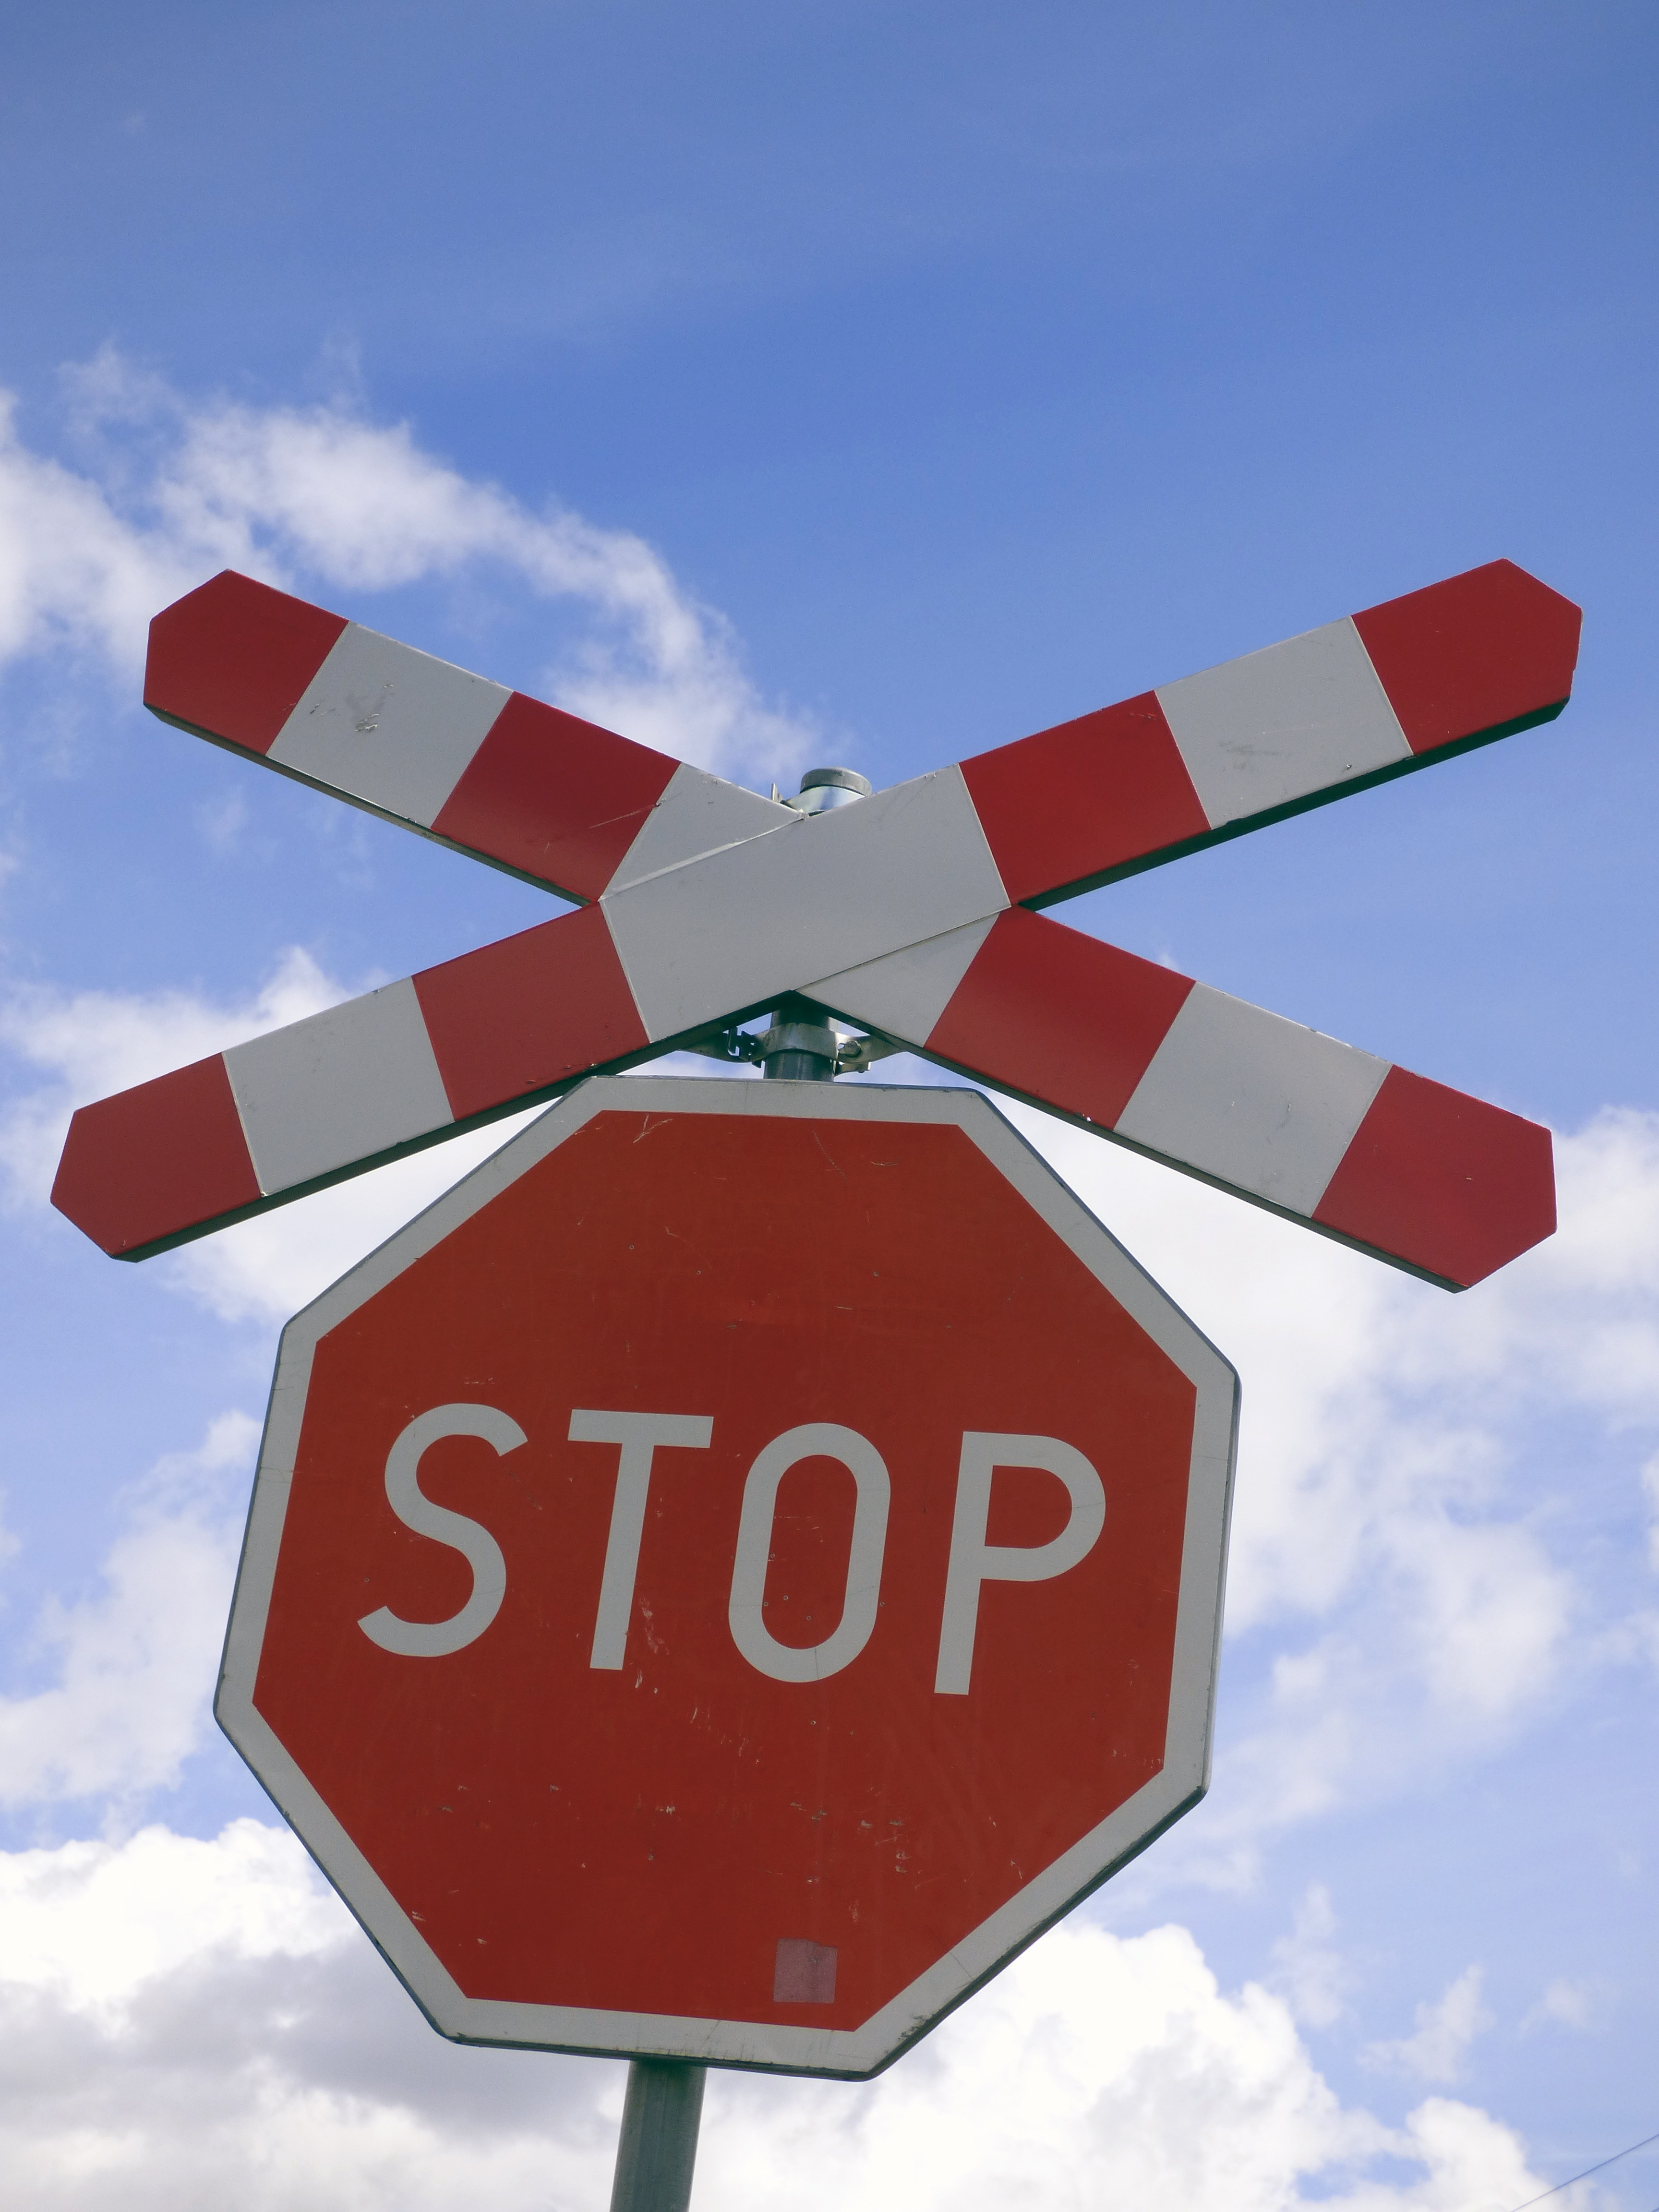 Stop signage during daytime